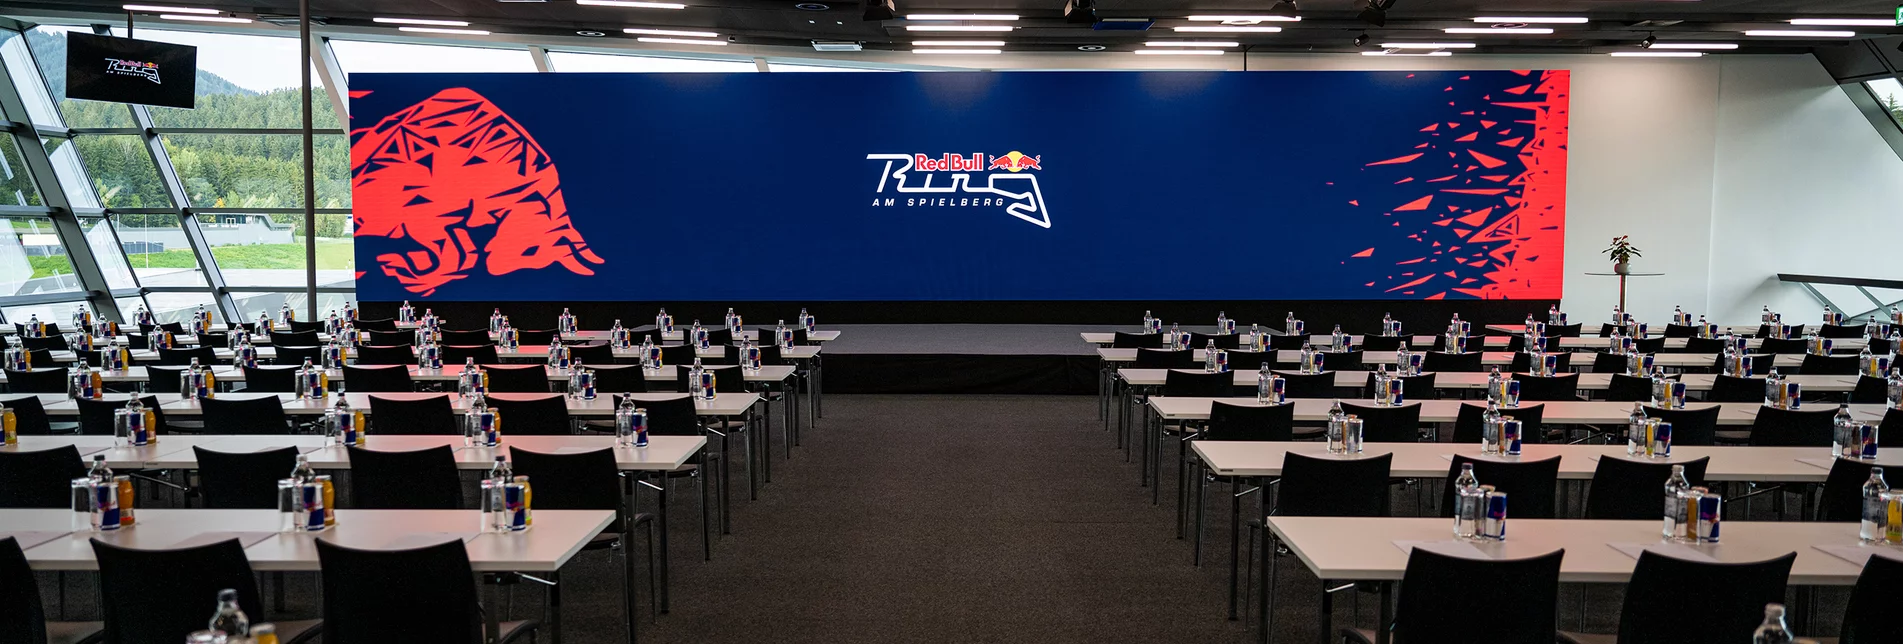 Red Bull Wing - Seminarraum mit großem LED-Screen | © Red Bull Ring